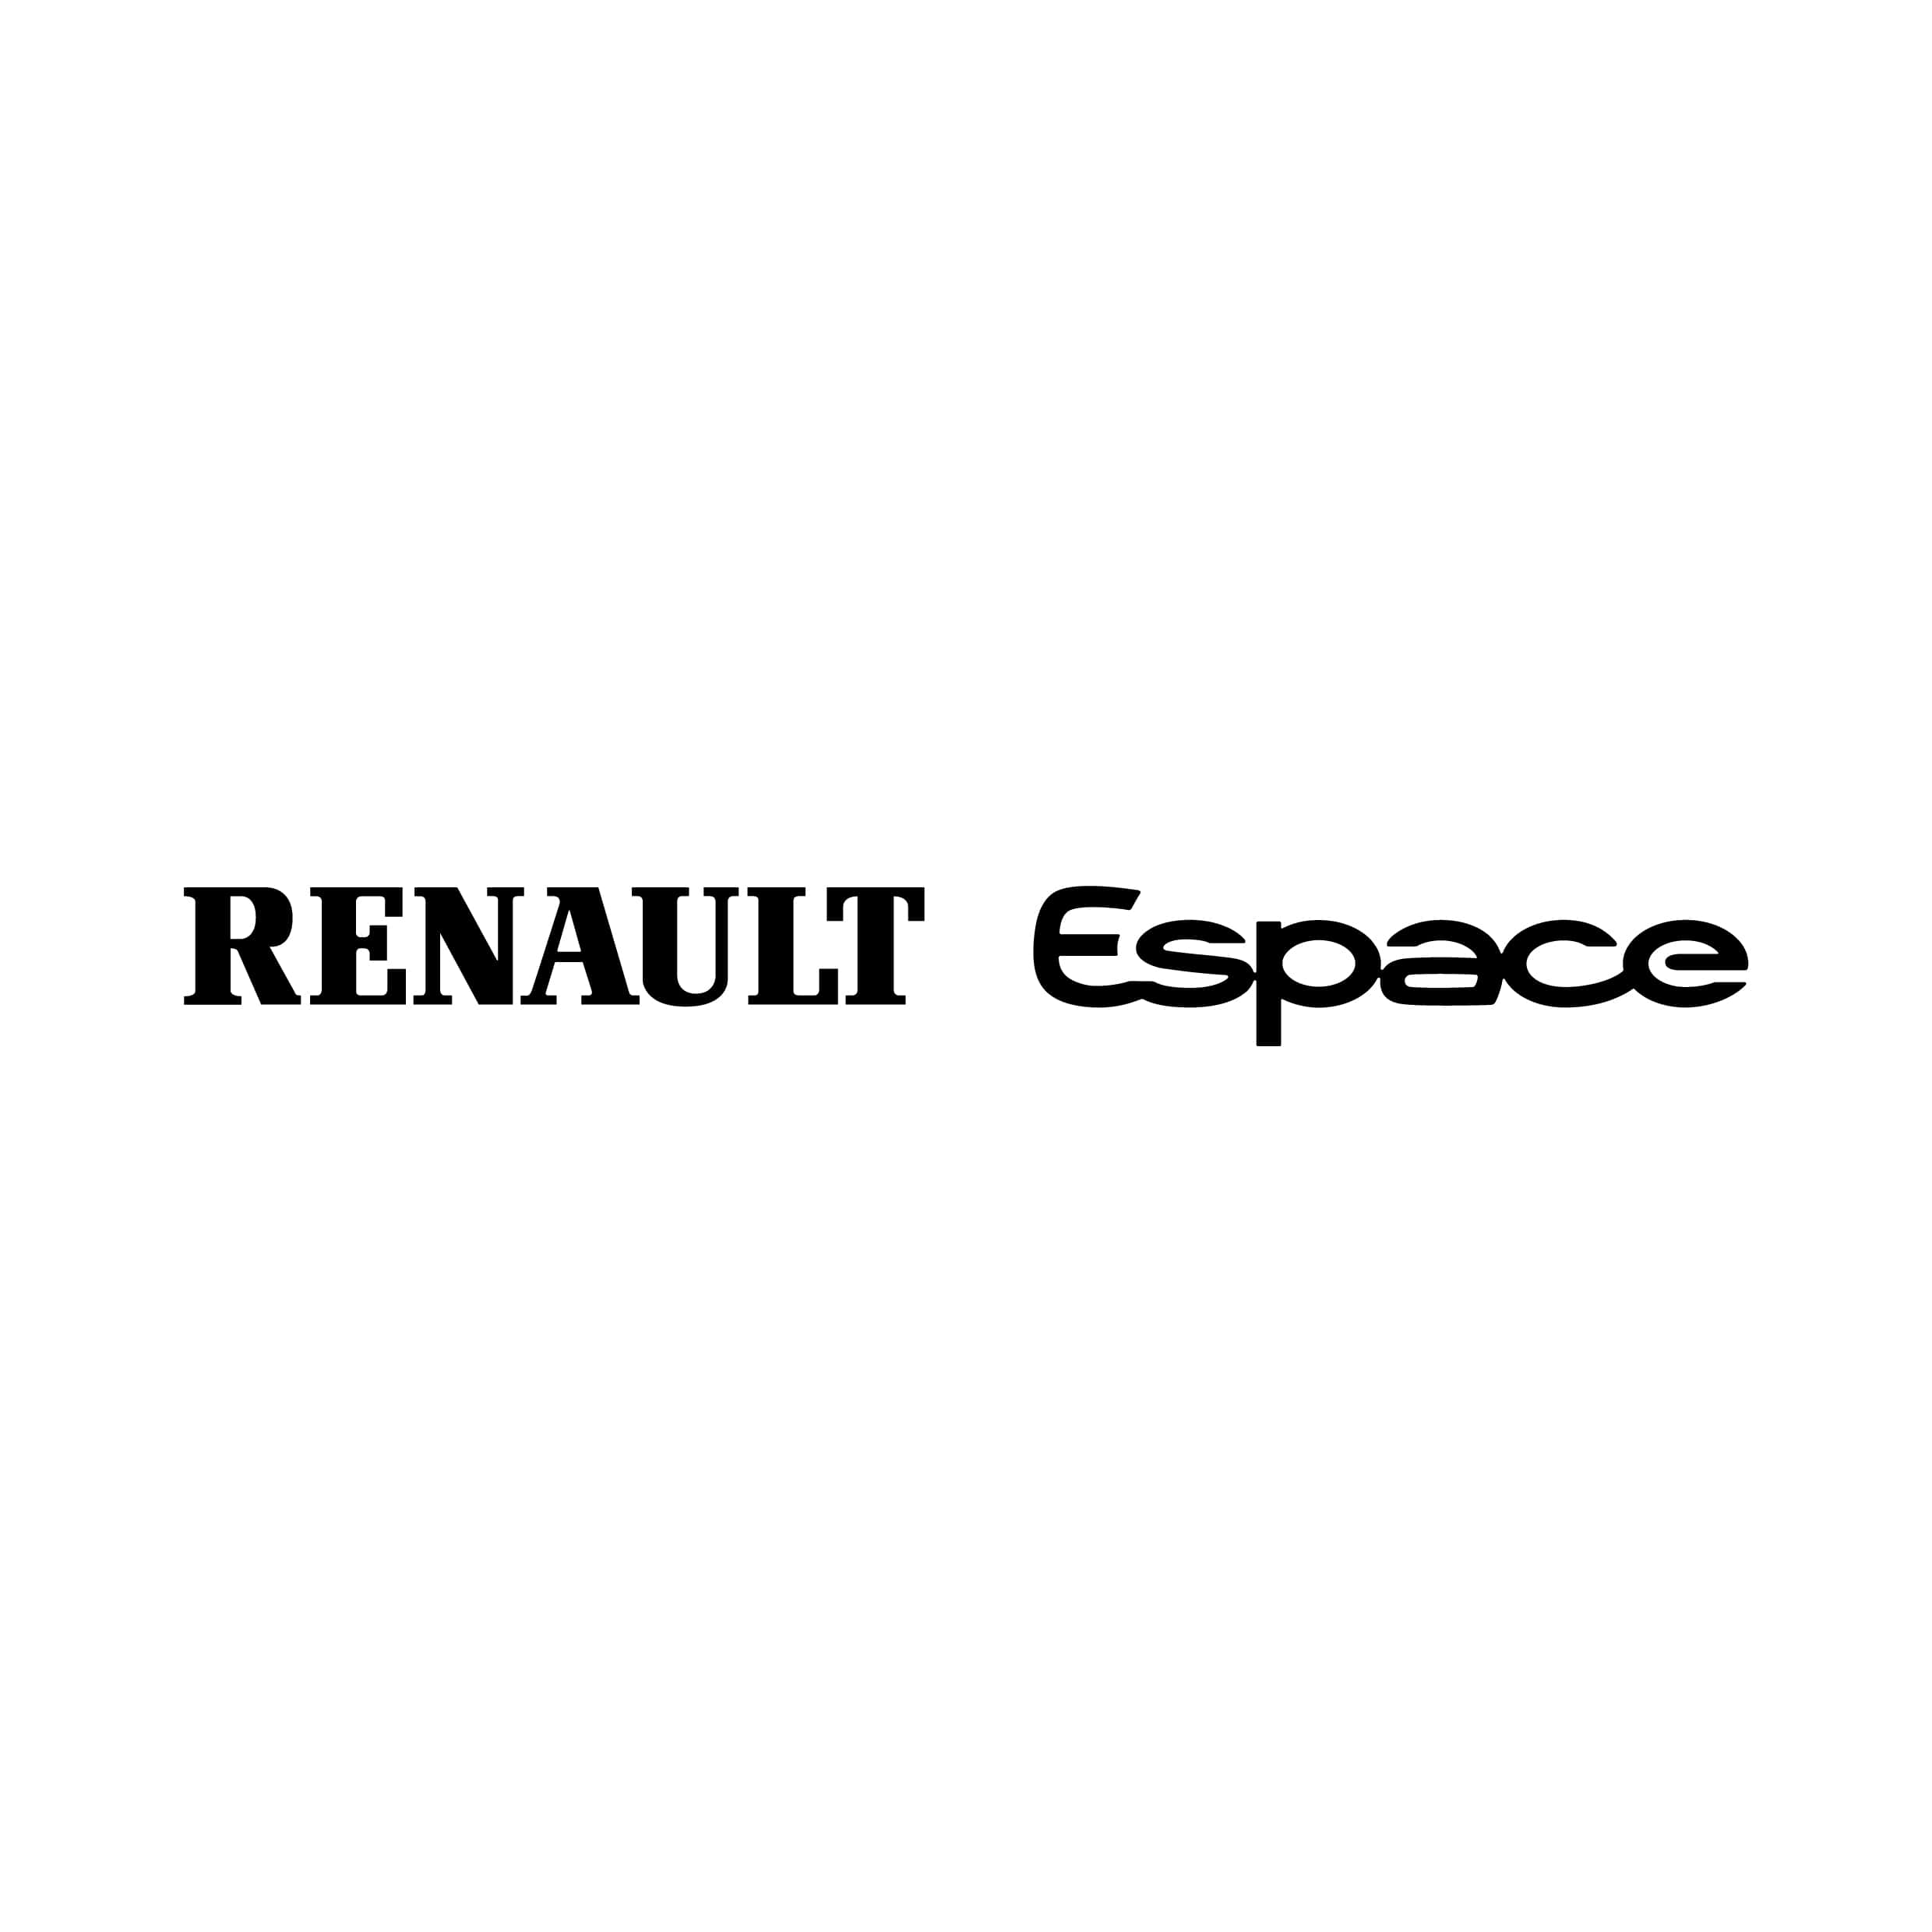 stickers-renault-espace-ref134-autocollant-voiture-sticker-auto-autocollants-decals-sponsors-racing-tuning-sport-logo-min